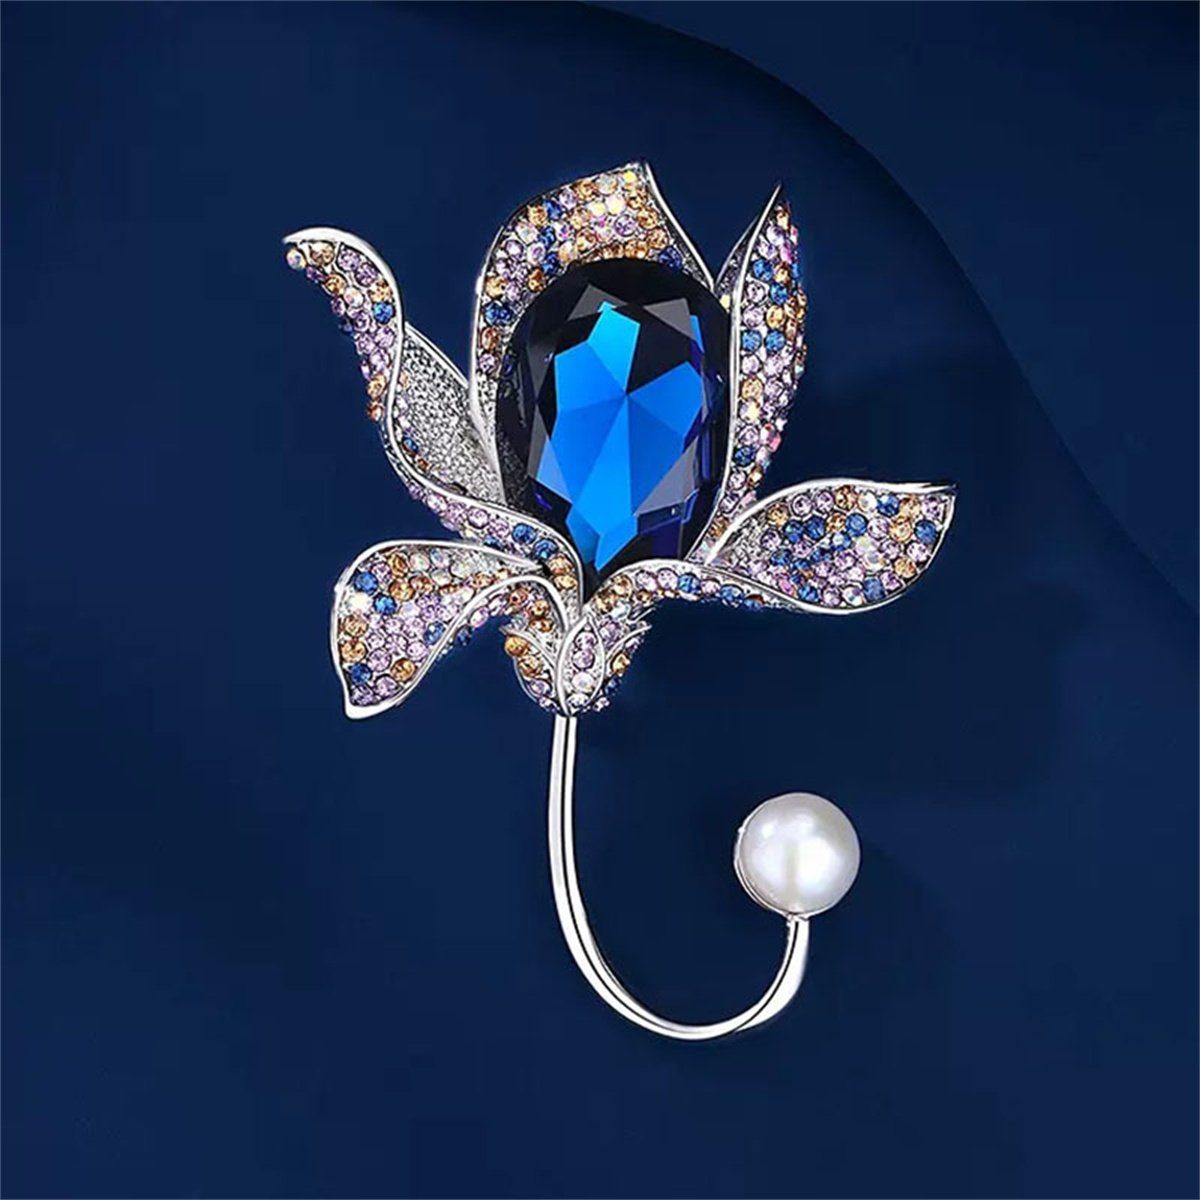 Brosche mit Vintage-Brosche selected Silber Kristall-Blumen-Orchideen-Perlen-Zirkon carefully